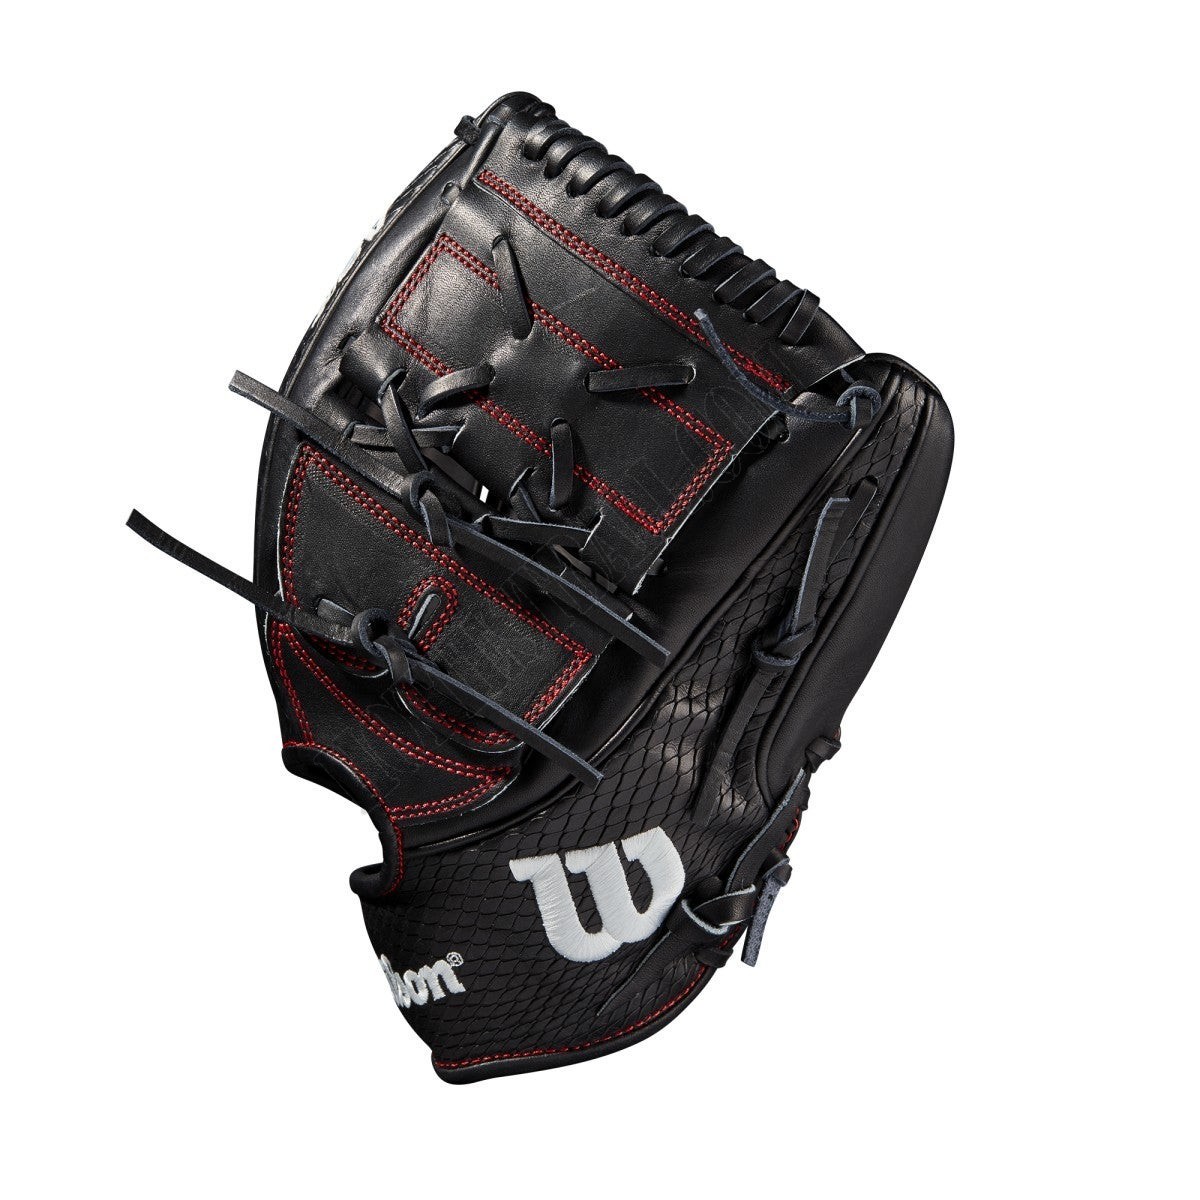 2021 A2K B2 12" Pitcher's Baseball Glove ● Wilson Promotions - -3